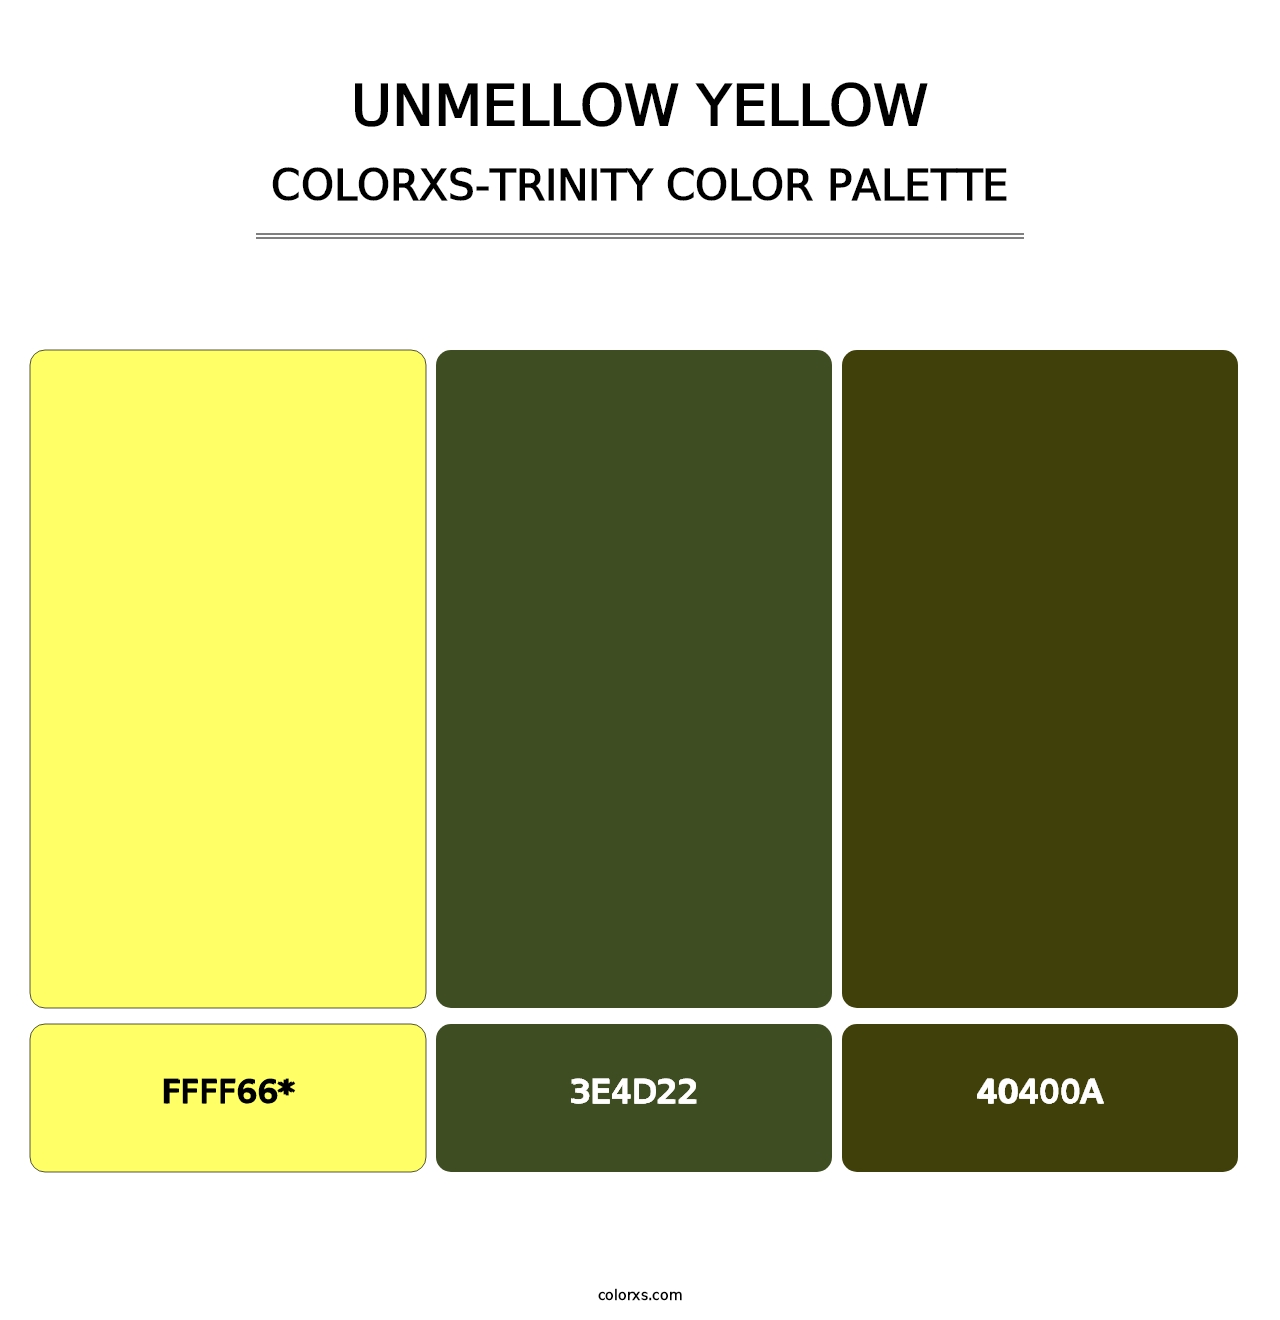 Unmellow Yellow - Colorxs Trinity Palette